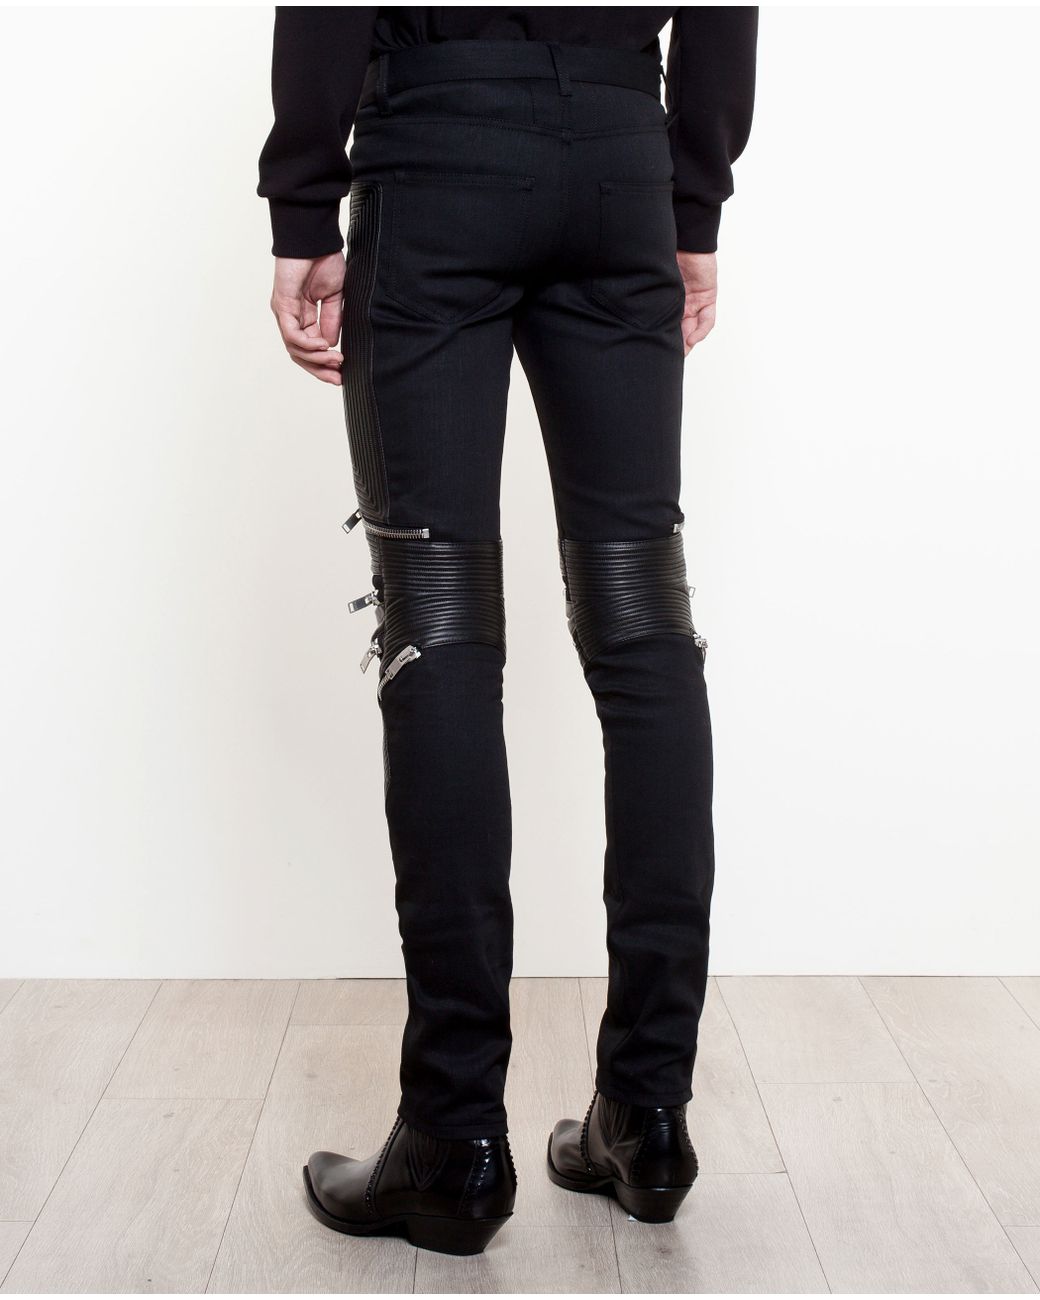 Saint Laurent Zip Detail Jeans in Black for Men